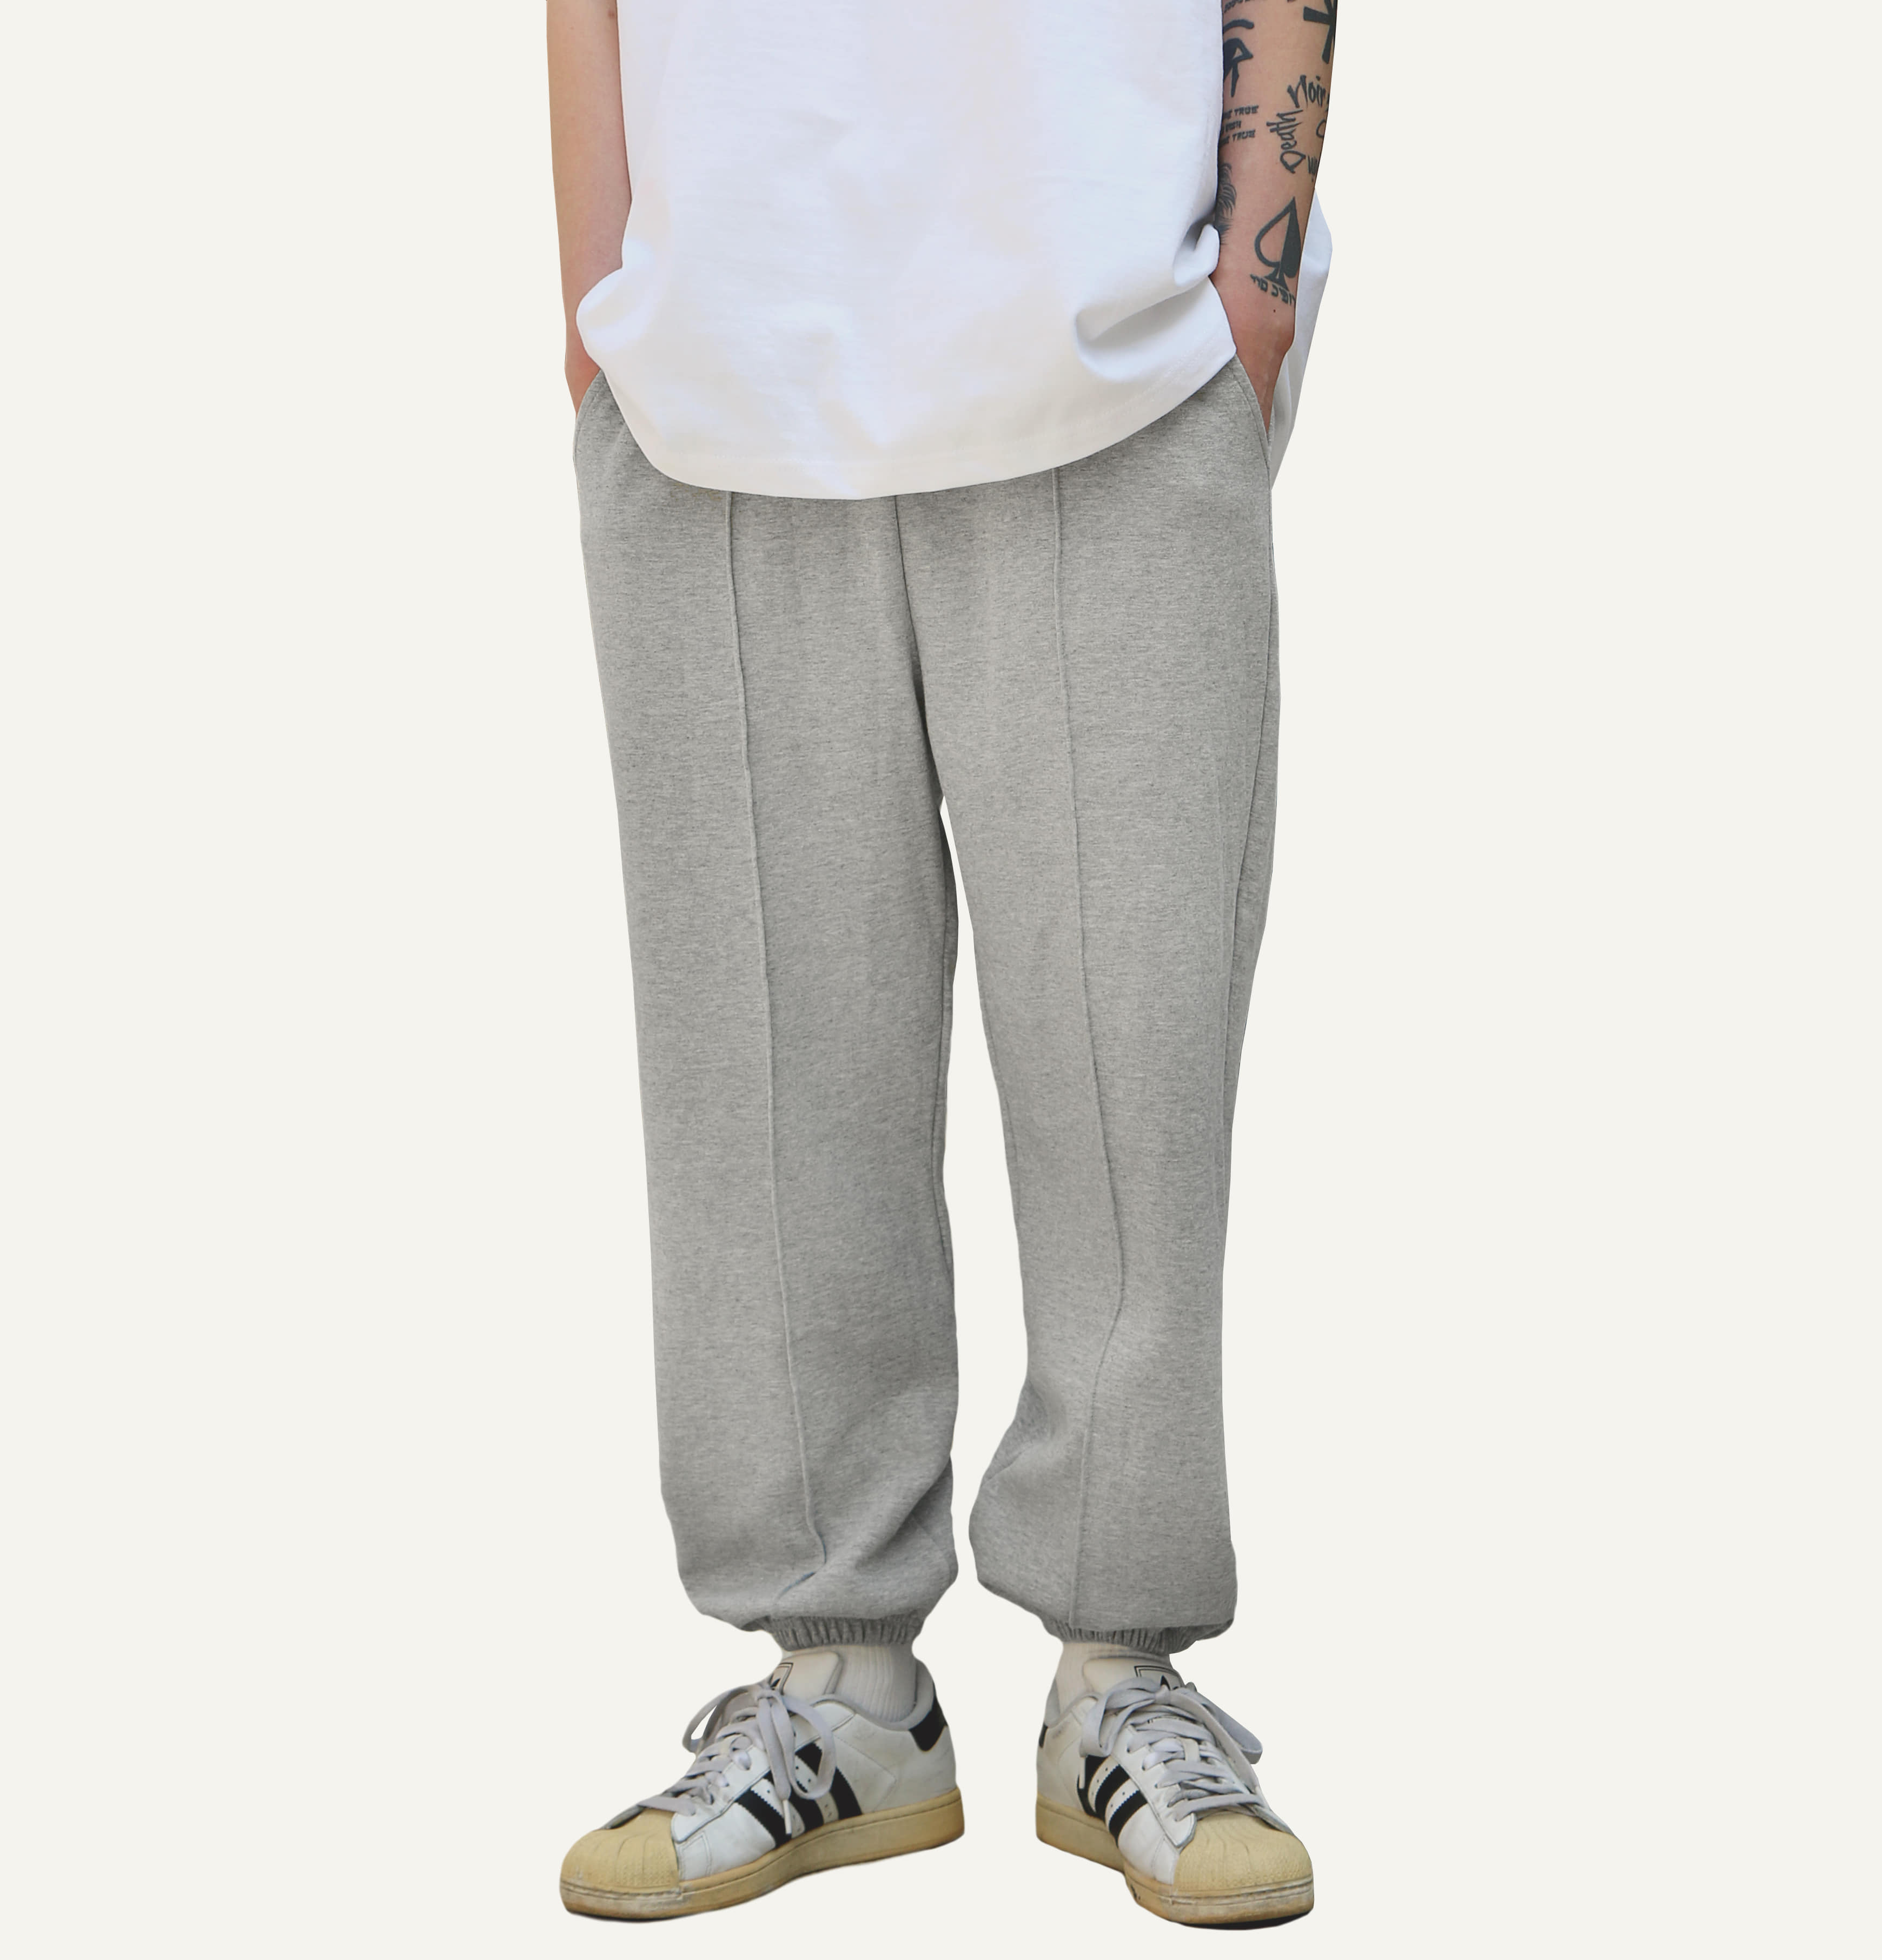 Sweat jogger pants grey